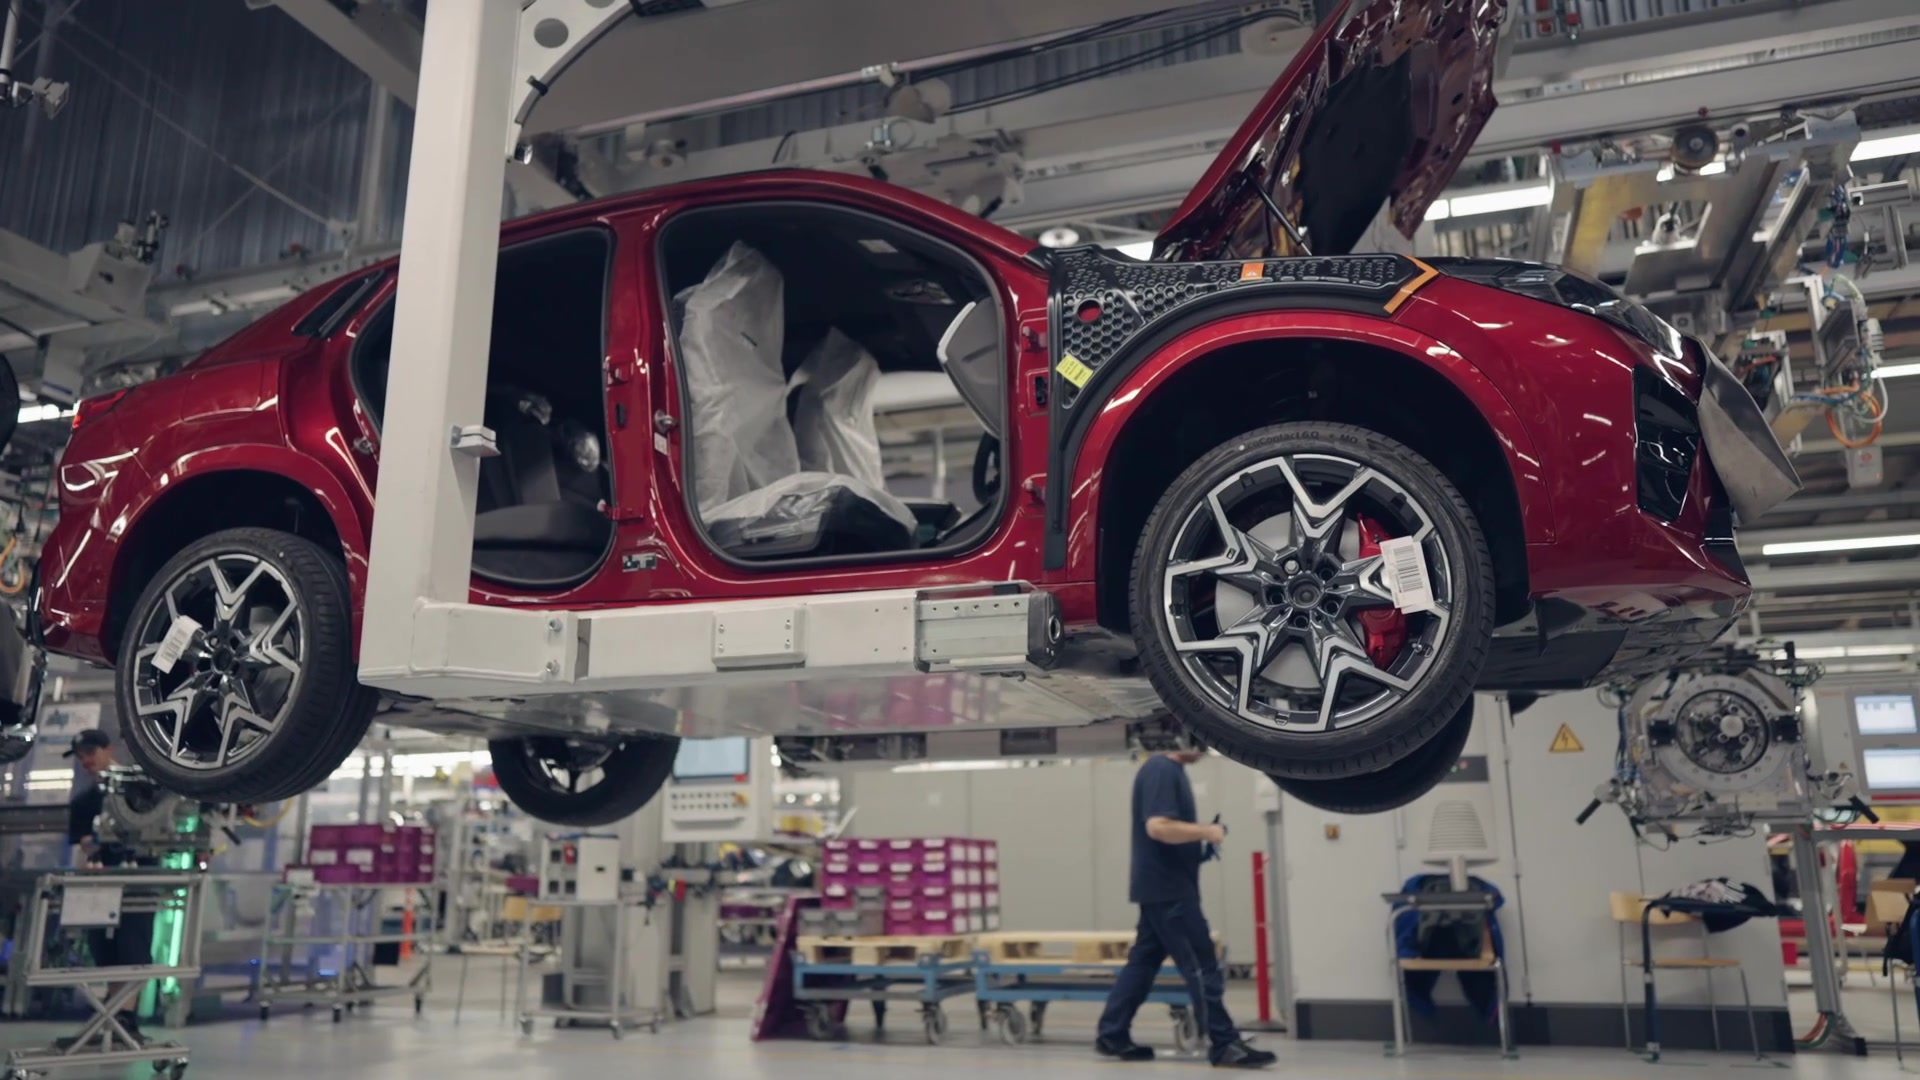 BMW iX2 – Underbody assembly, bumper installation, tire fitting